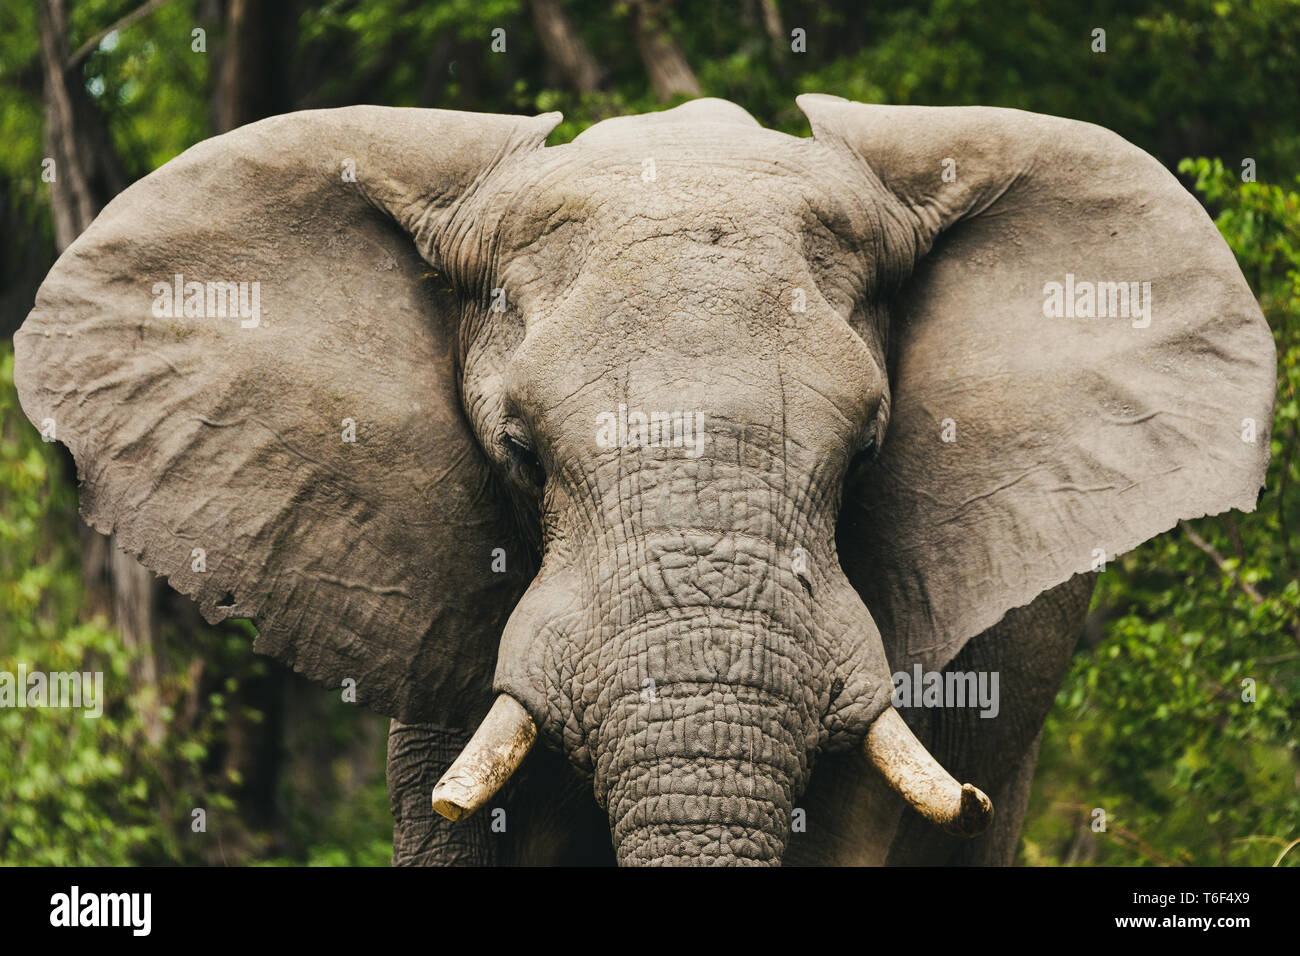 African Elephant in Moremi, Botswana safari wildlife Stock Photo